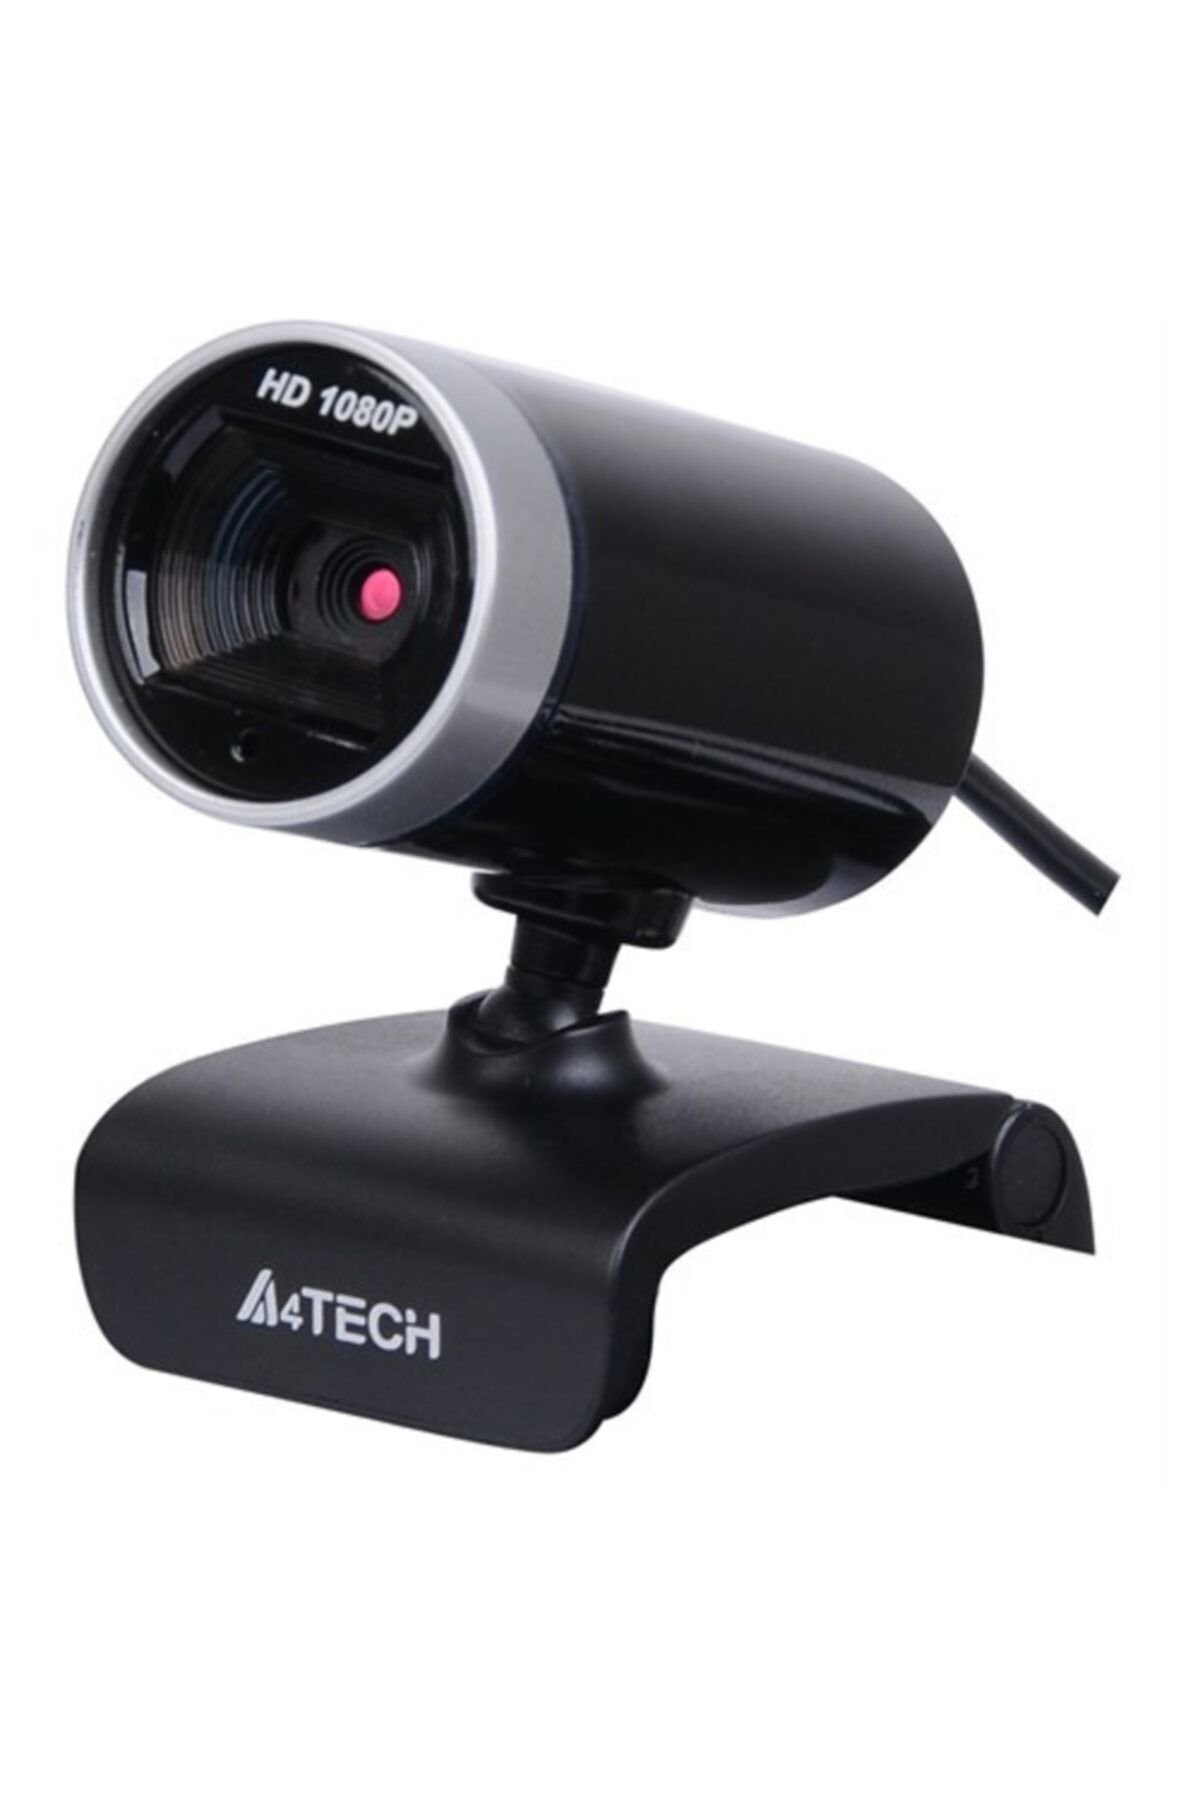 A4 Tech Dahili Microfonlu Usb Webcam Pk-910h Full Hd 1080p